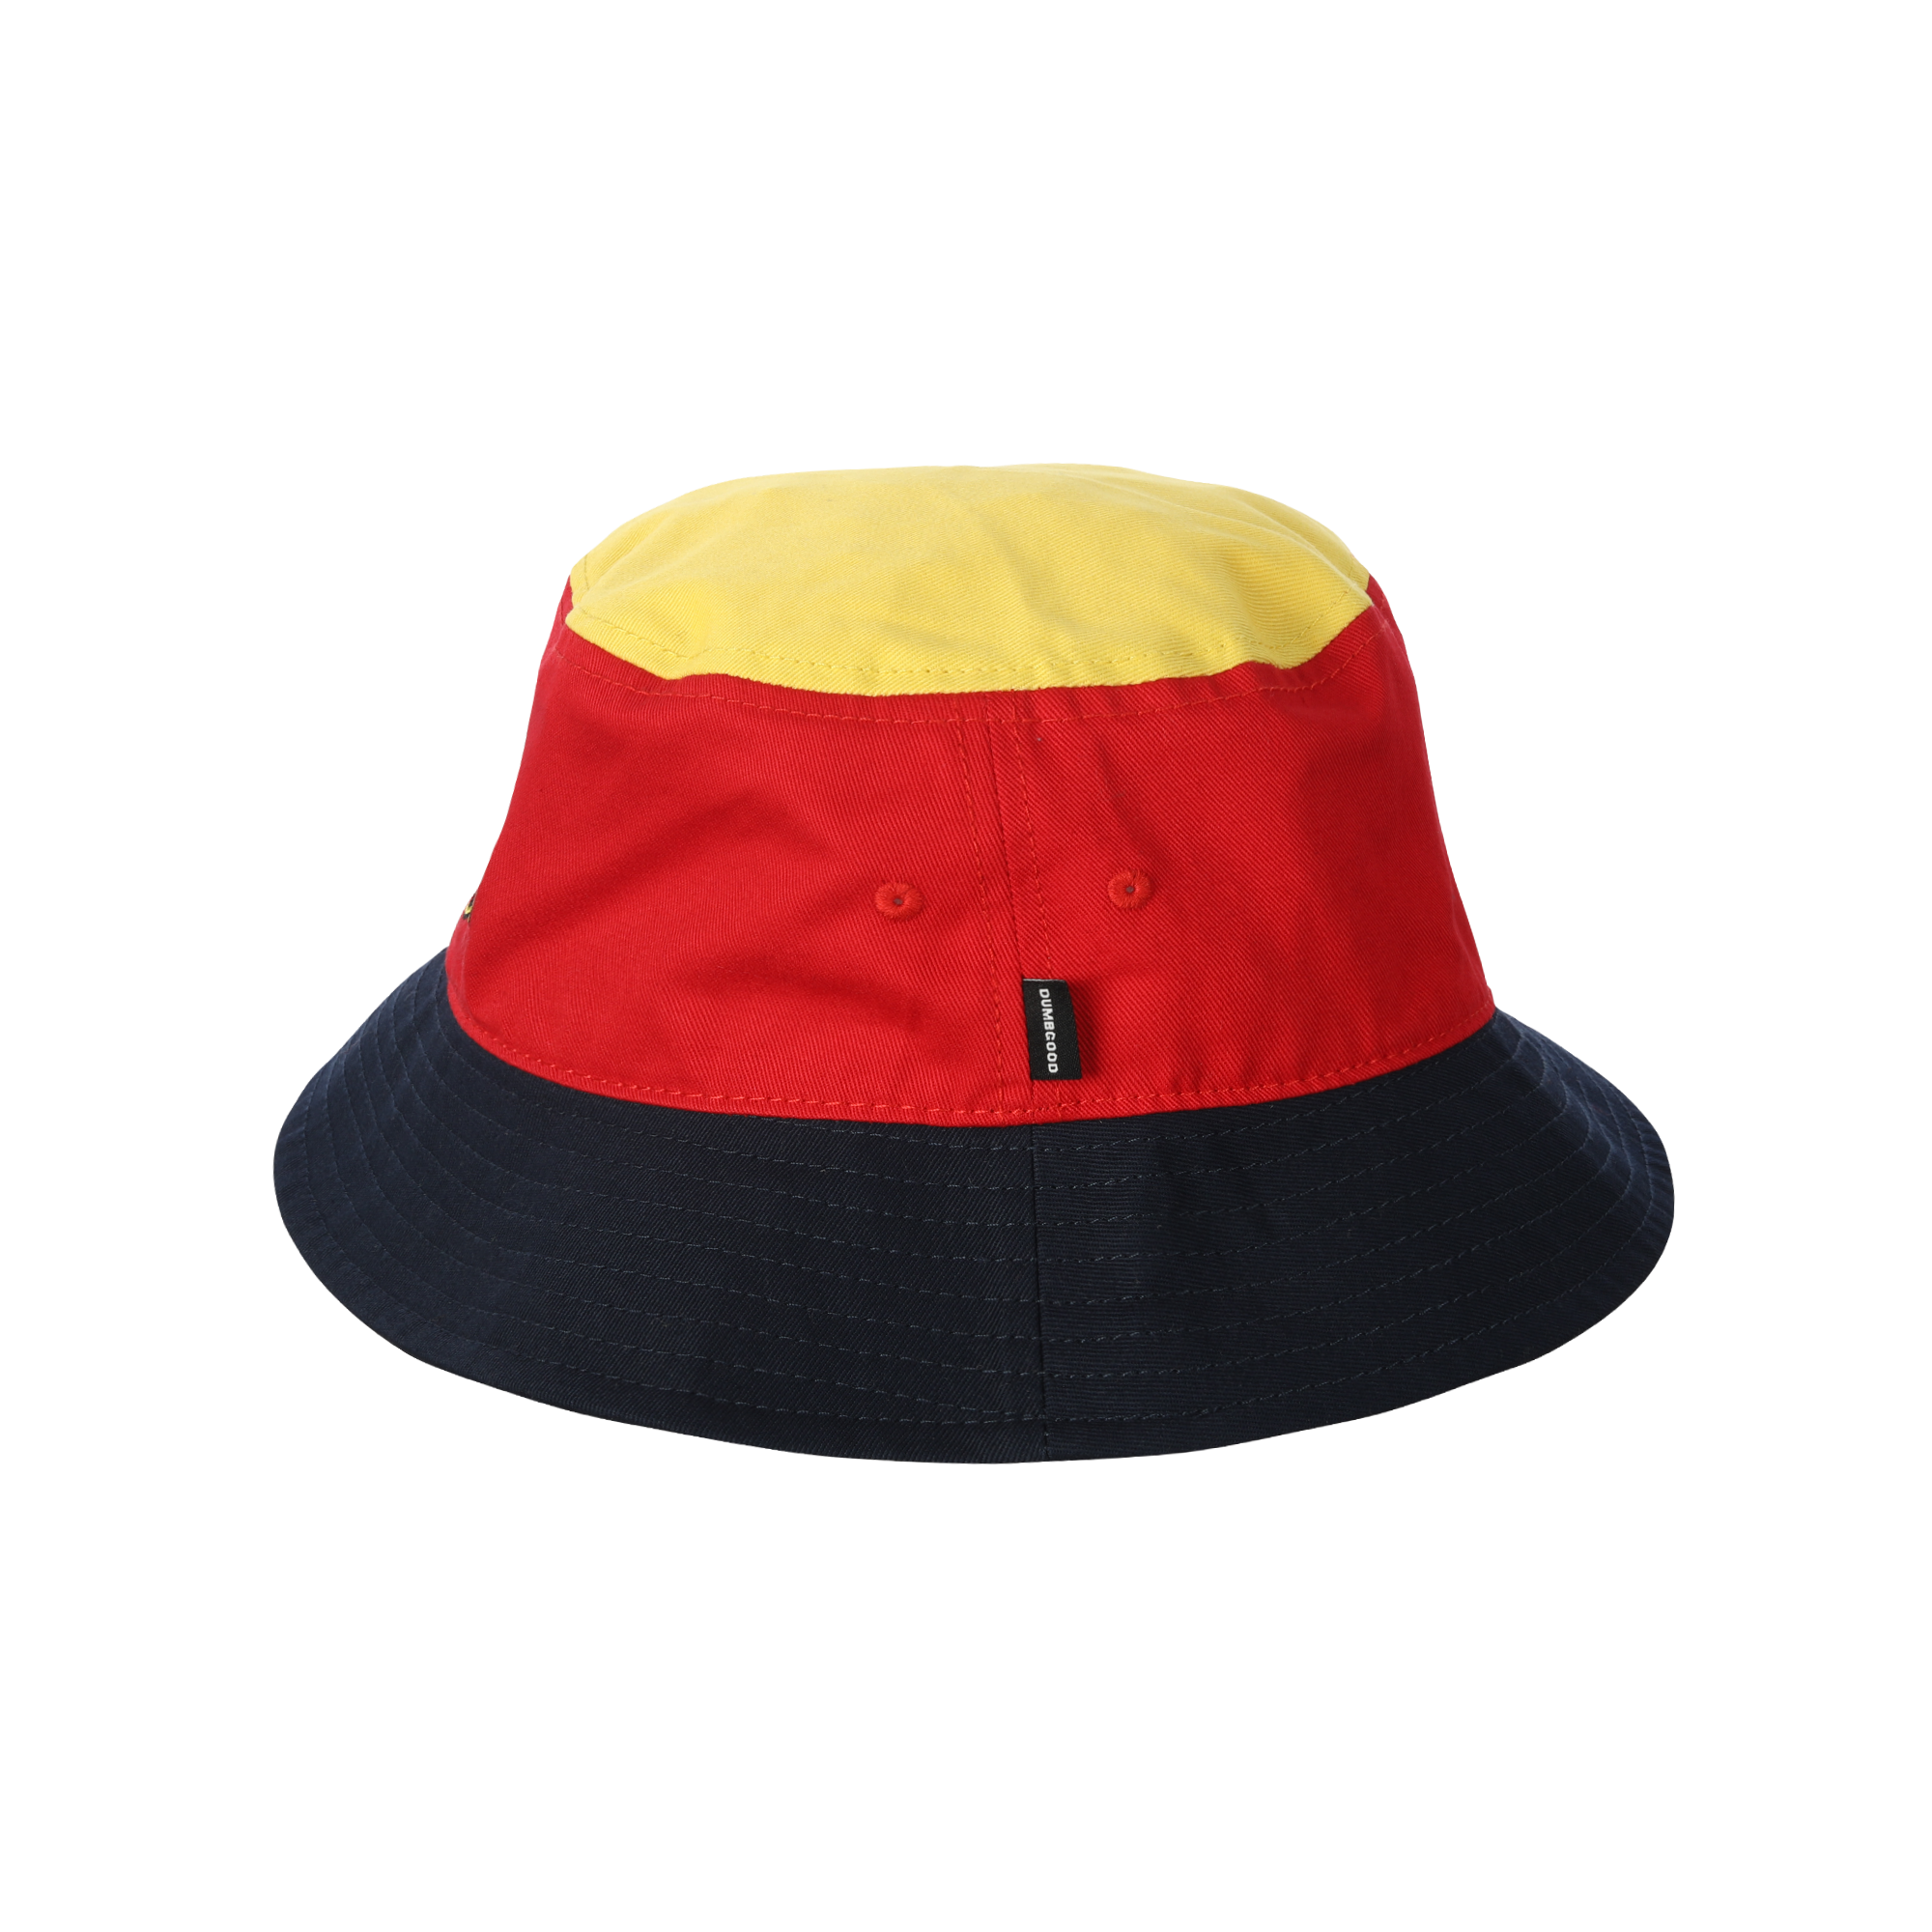 Colorblock Bucket Hat